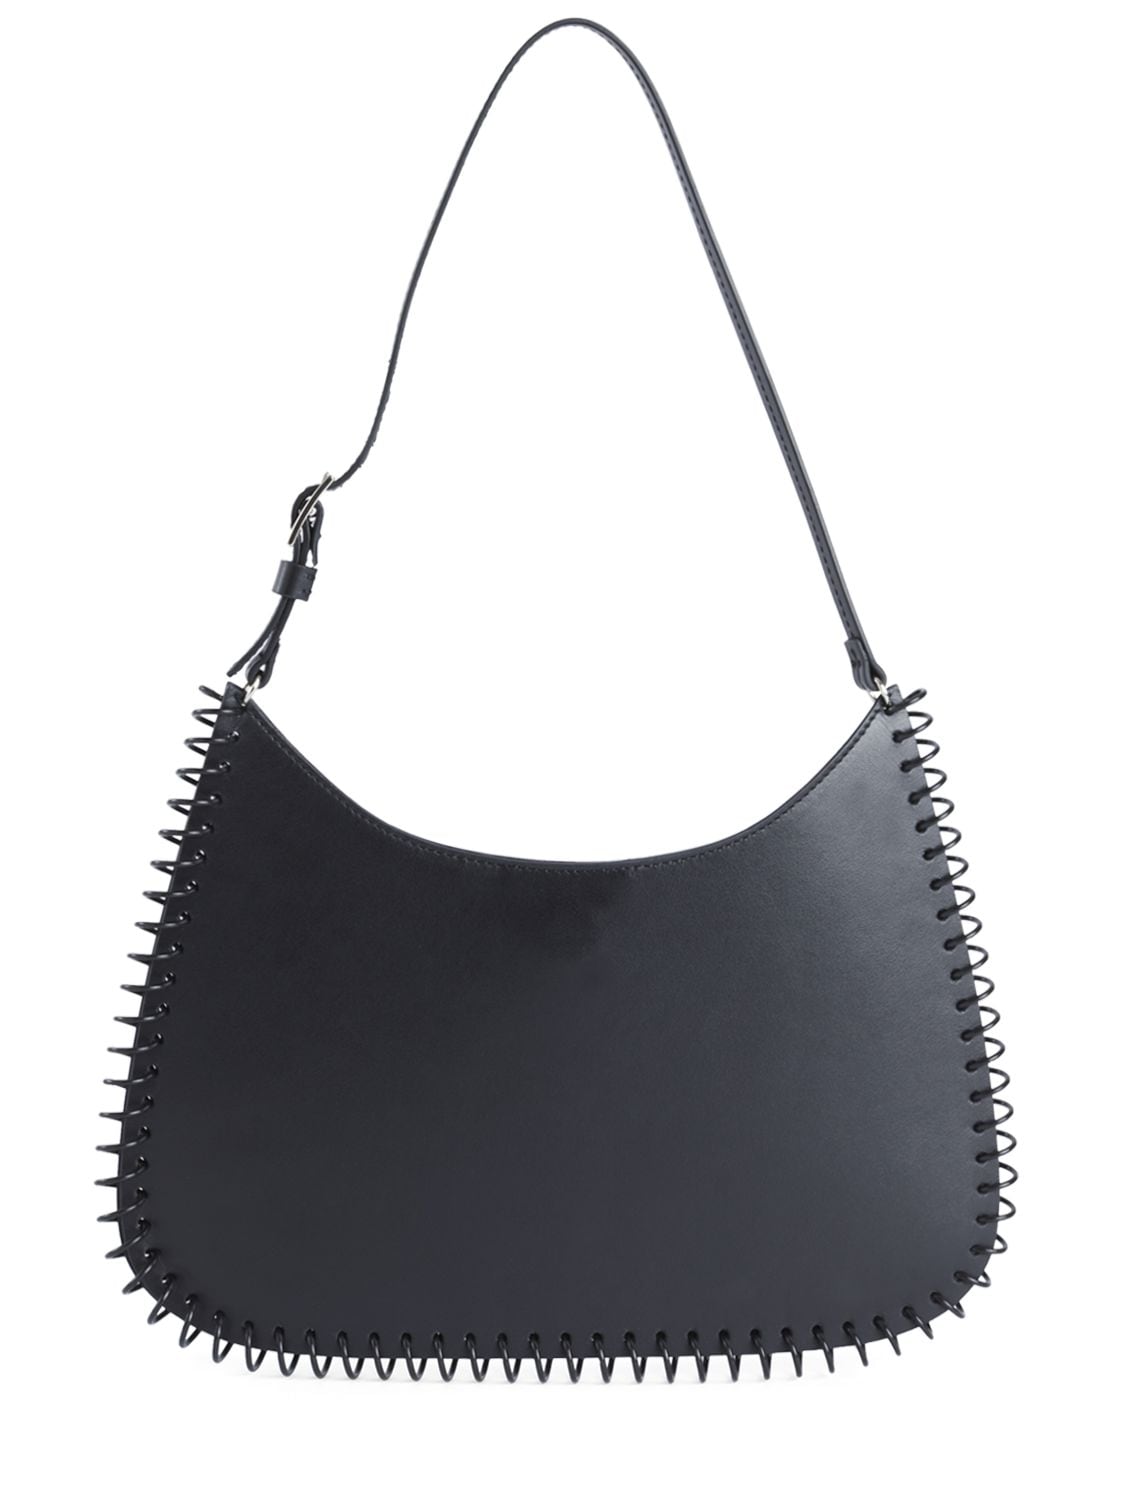 Petal Mini Faux Leather Shoulder Bag in Black - Coperni